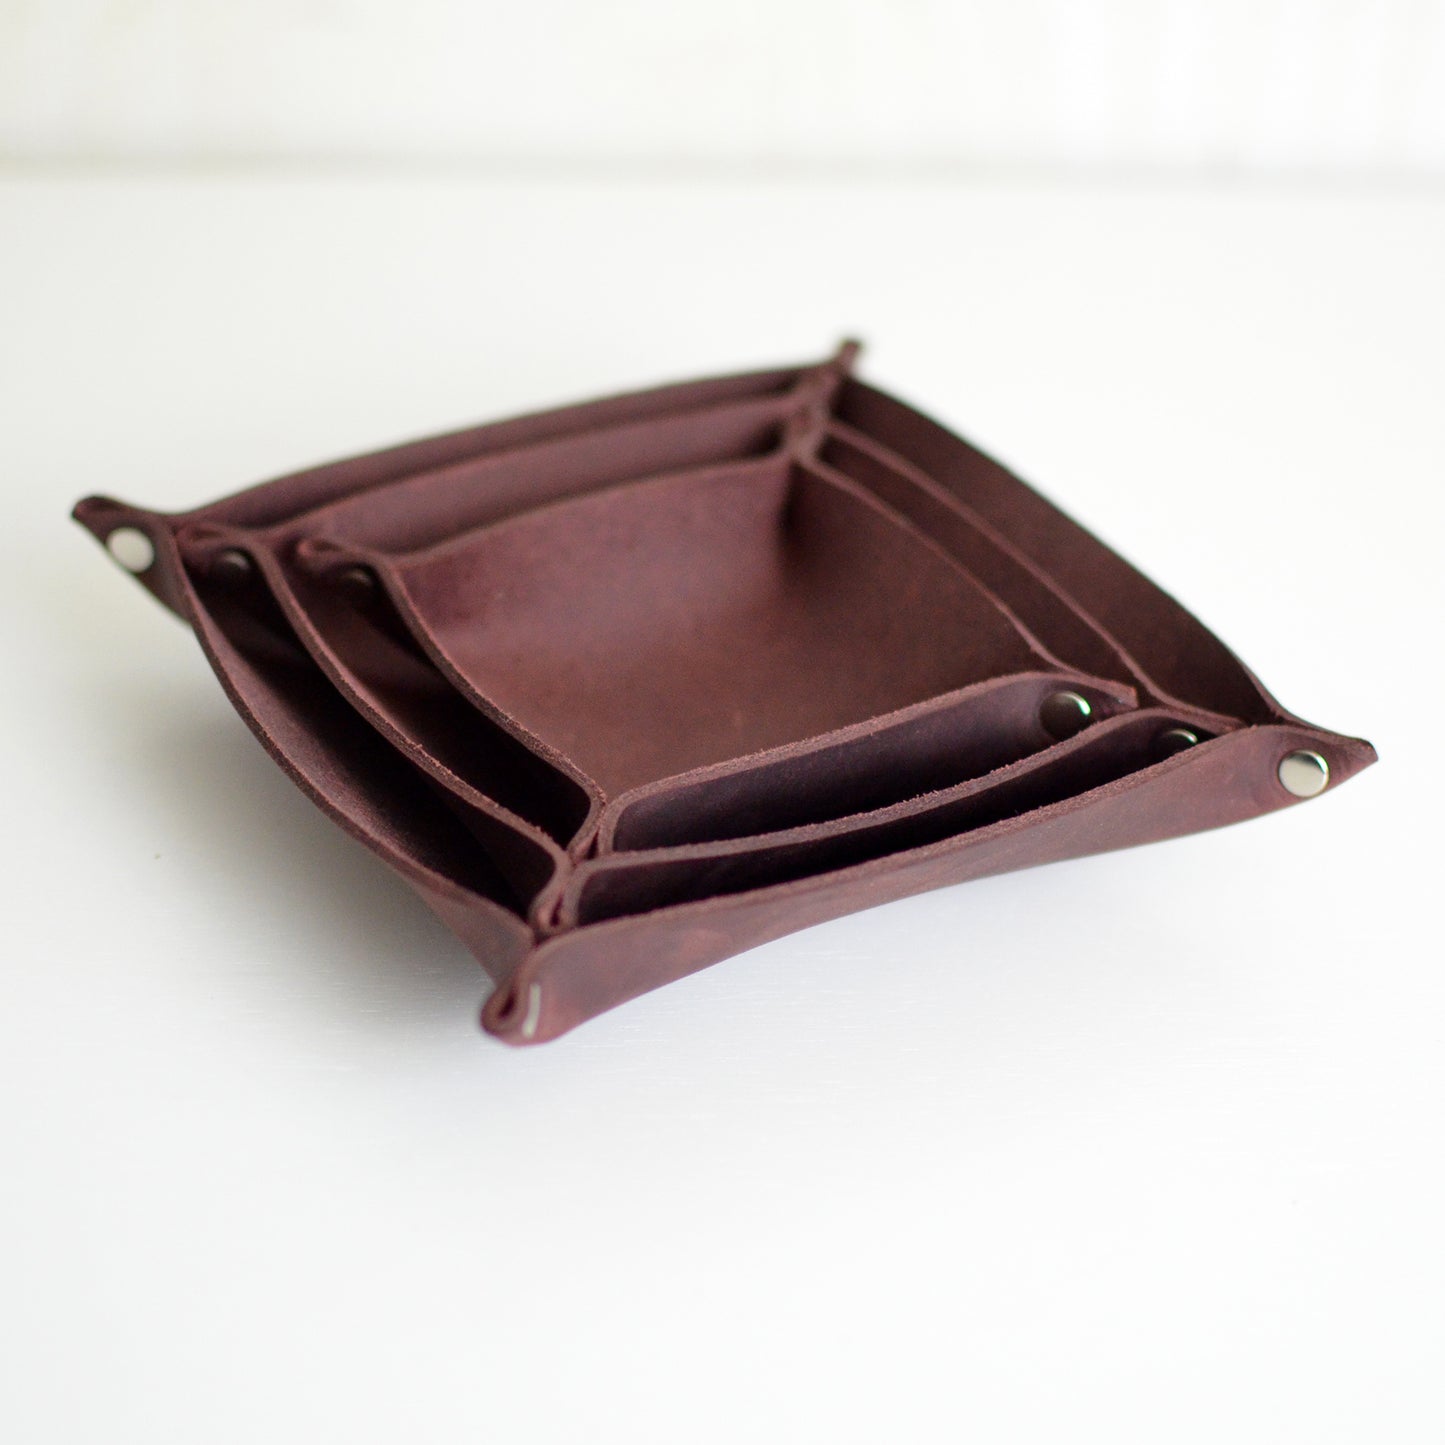 3 Stacking Trays - Merlot Leather